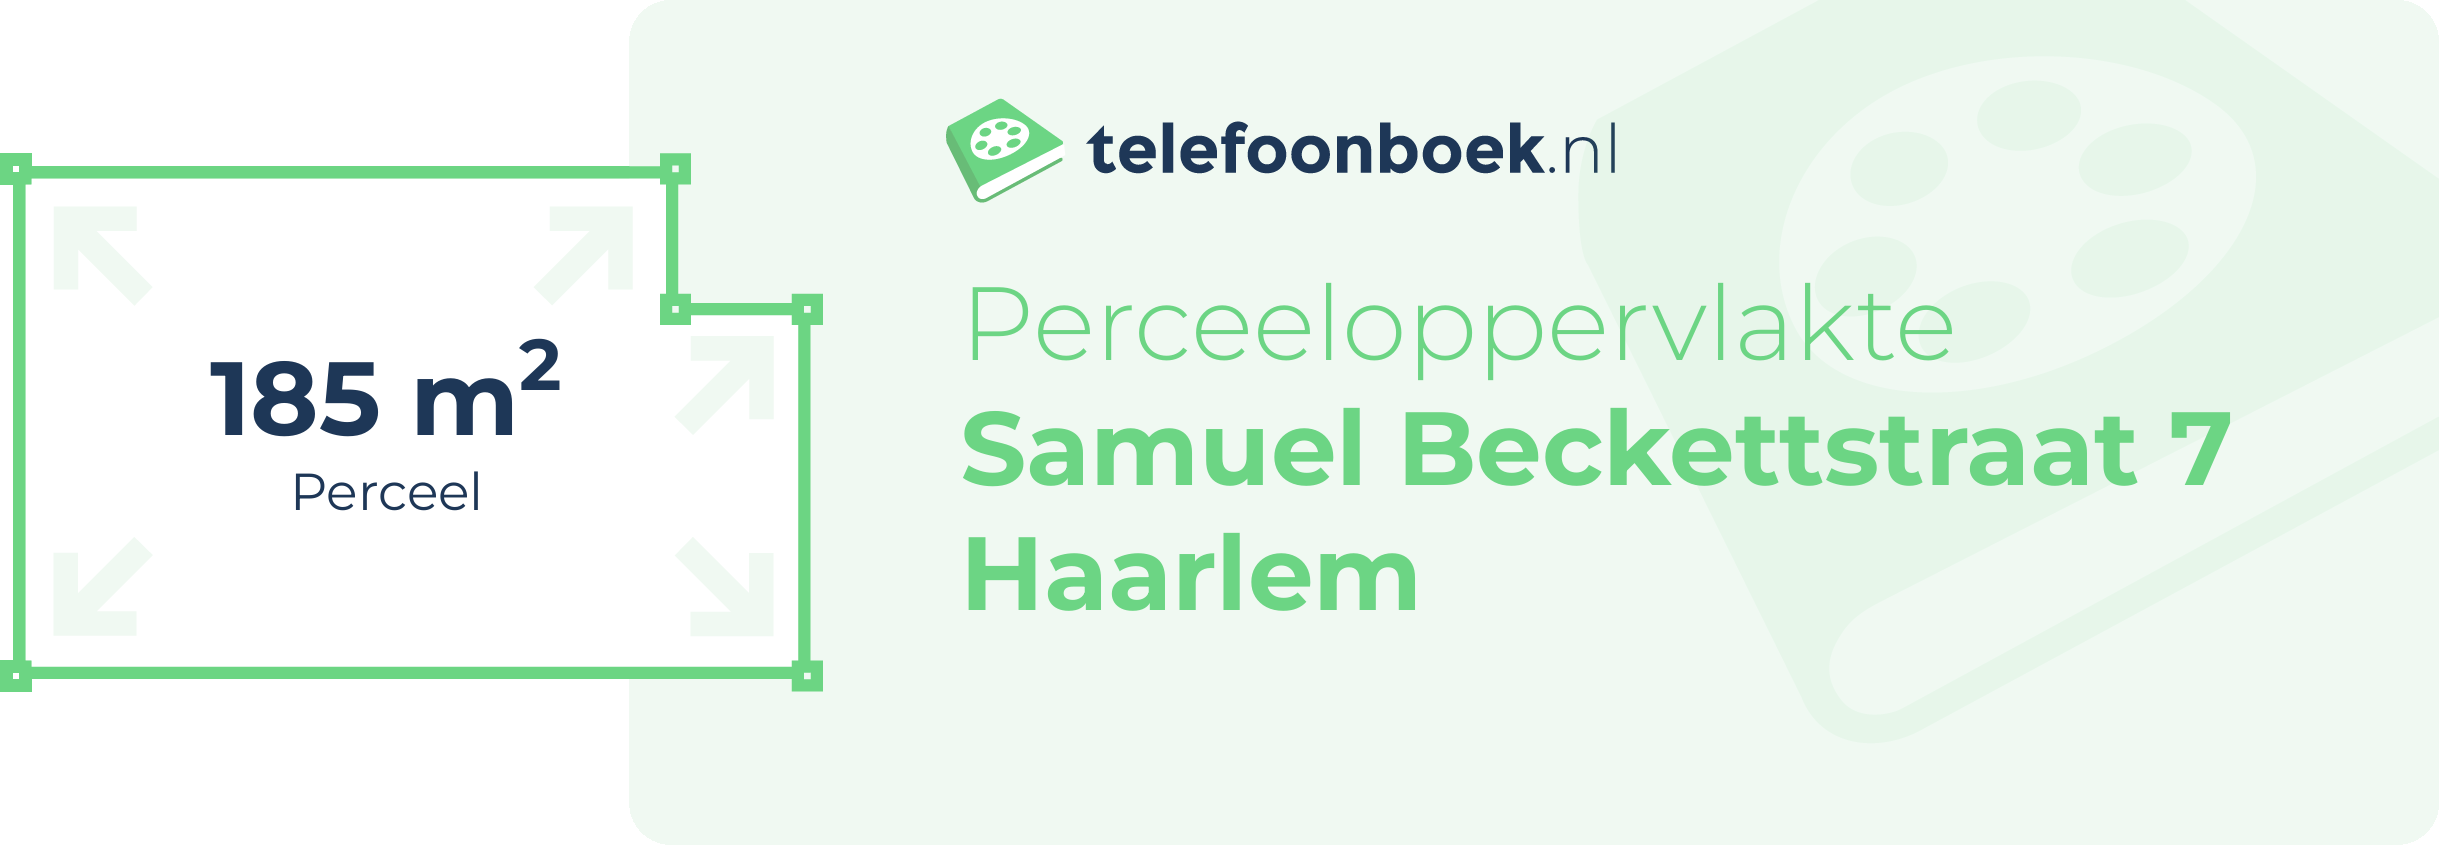 Perceeloppervlakte Samuel Beckettstraat 7 Haarlem